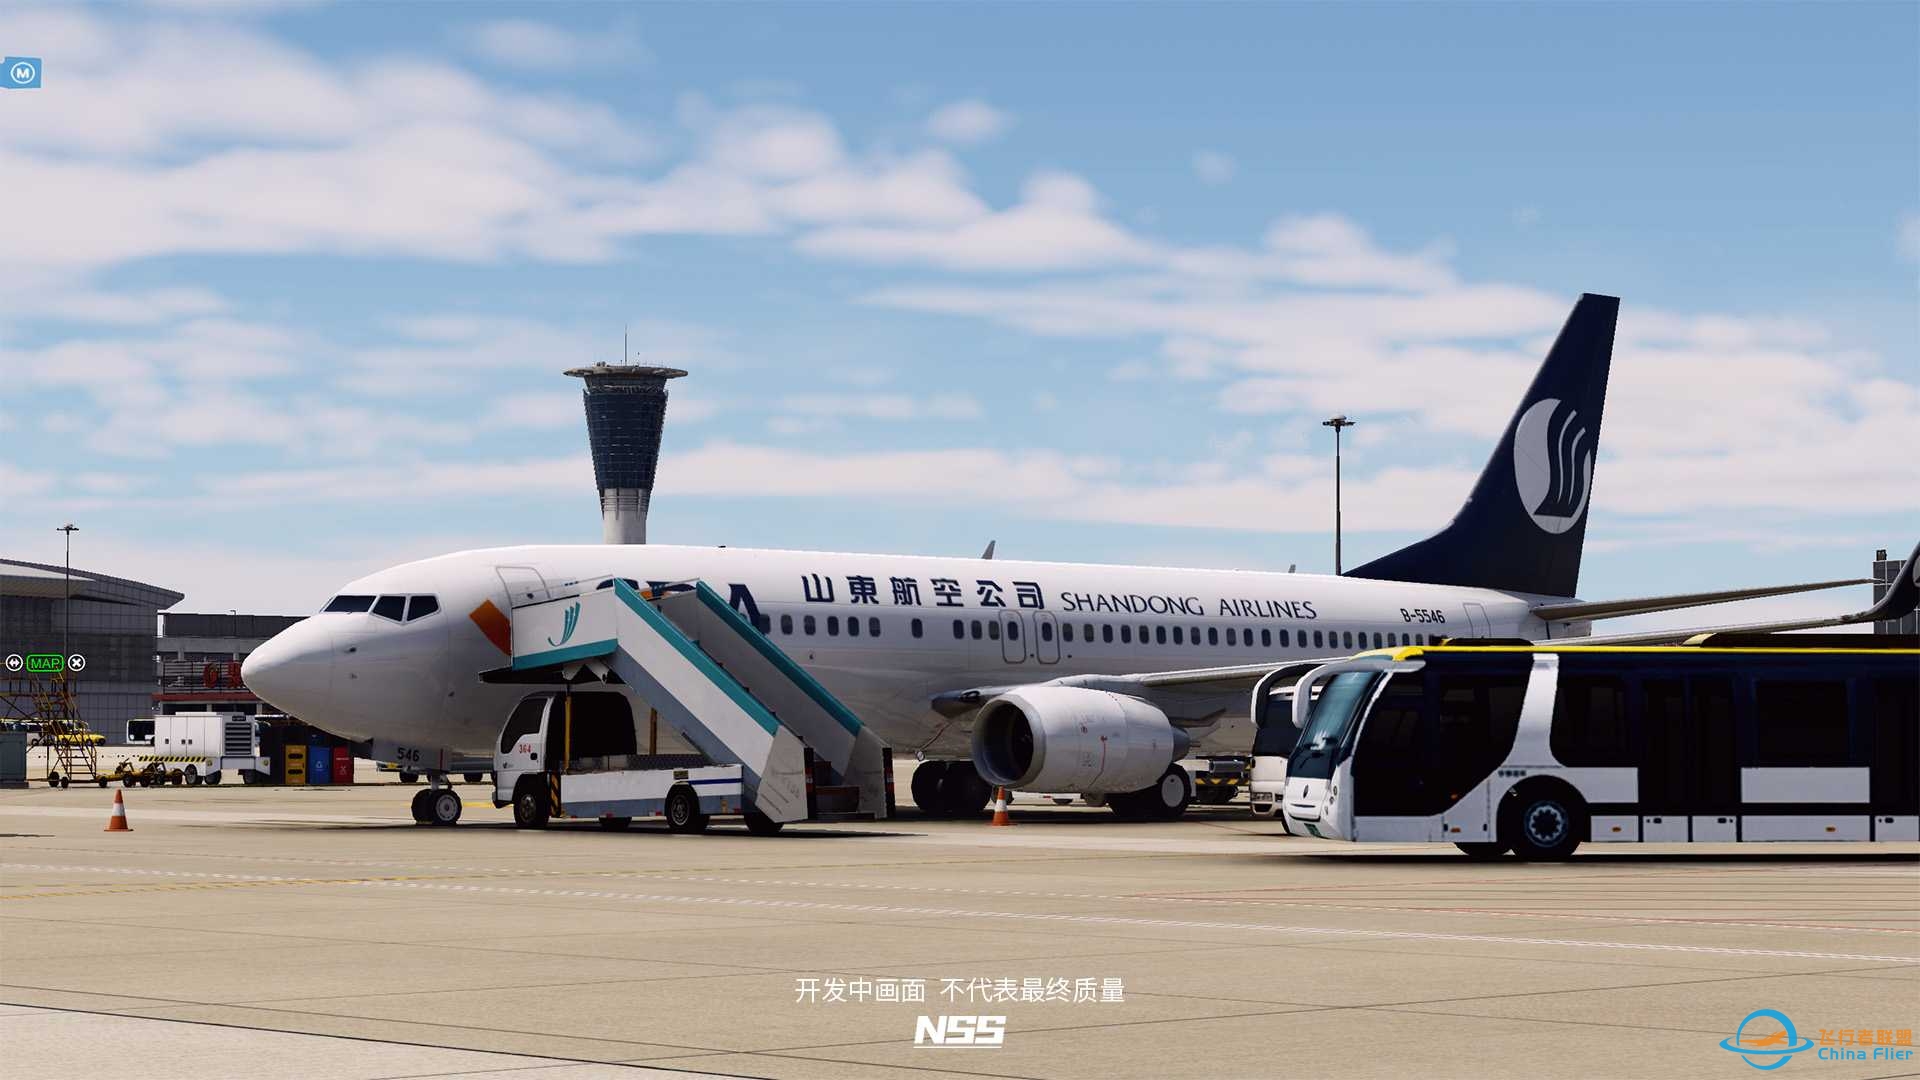 NSS地景开发组 | ZSJN | 济南遥墙国际机场项目最新进展-5323 